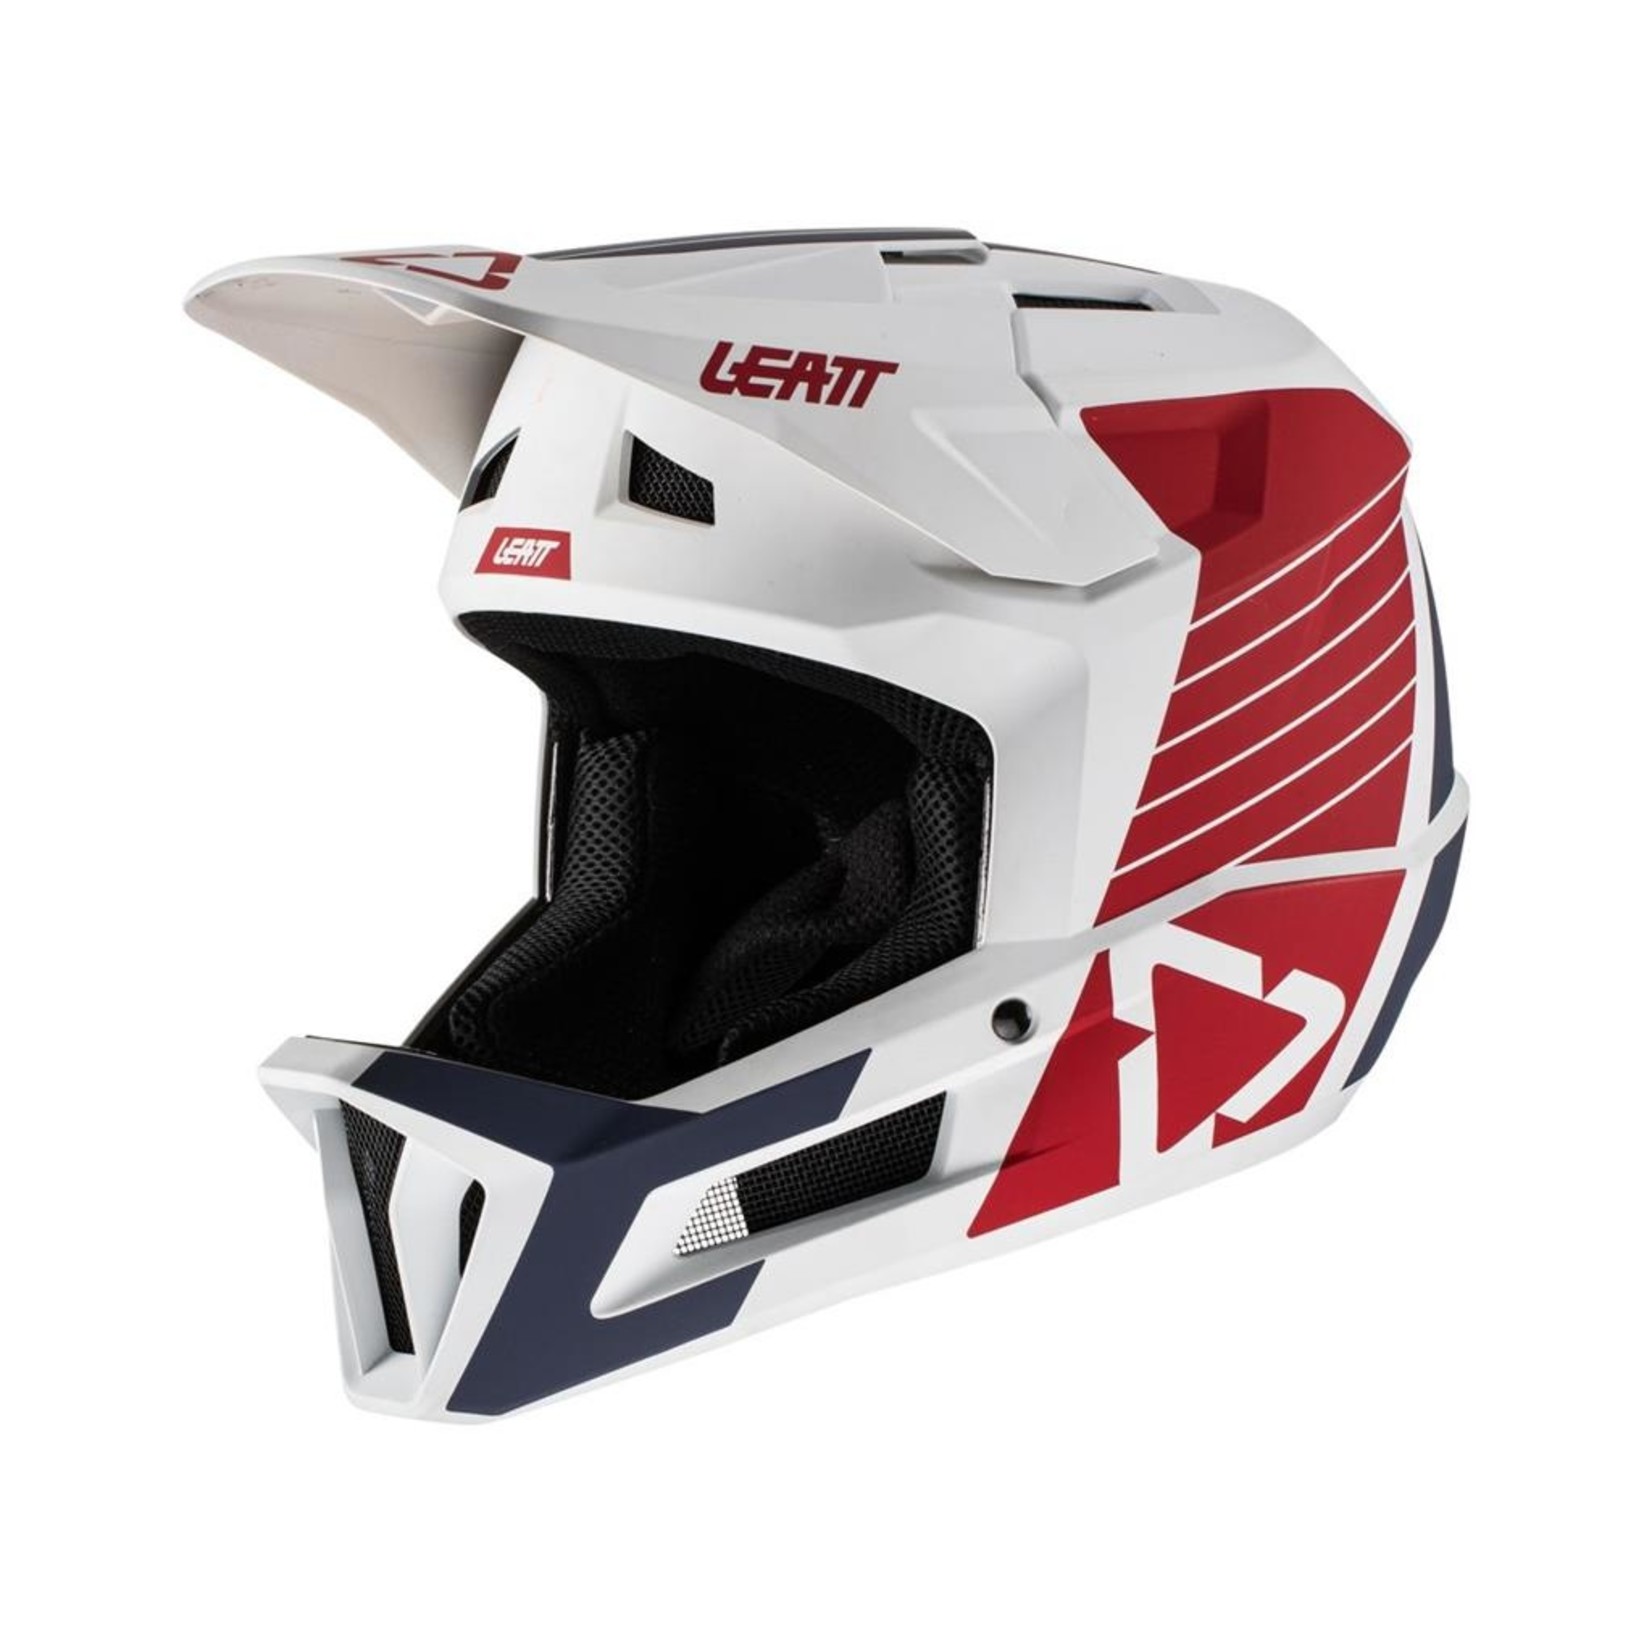 Leatt Leatt MTB 1.0 DH Jr Full Face Helmet